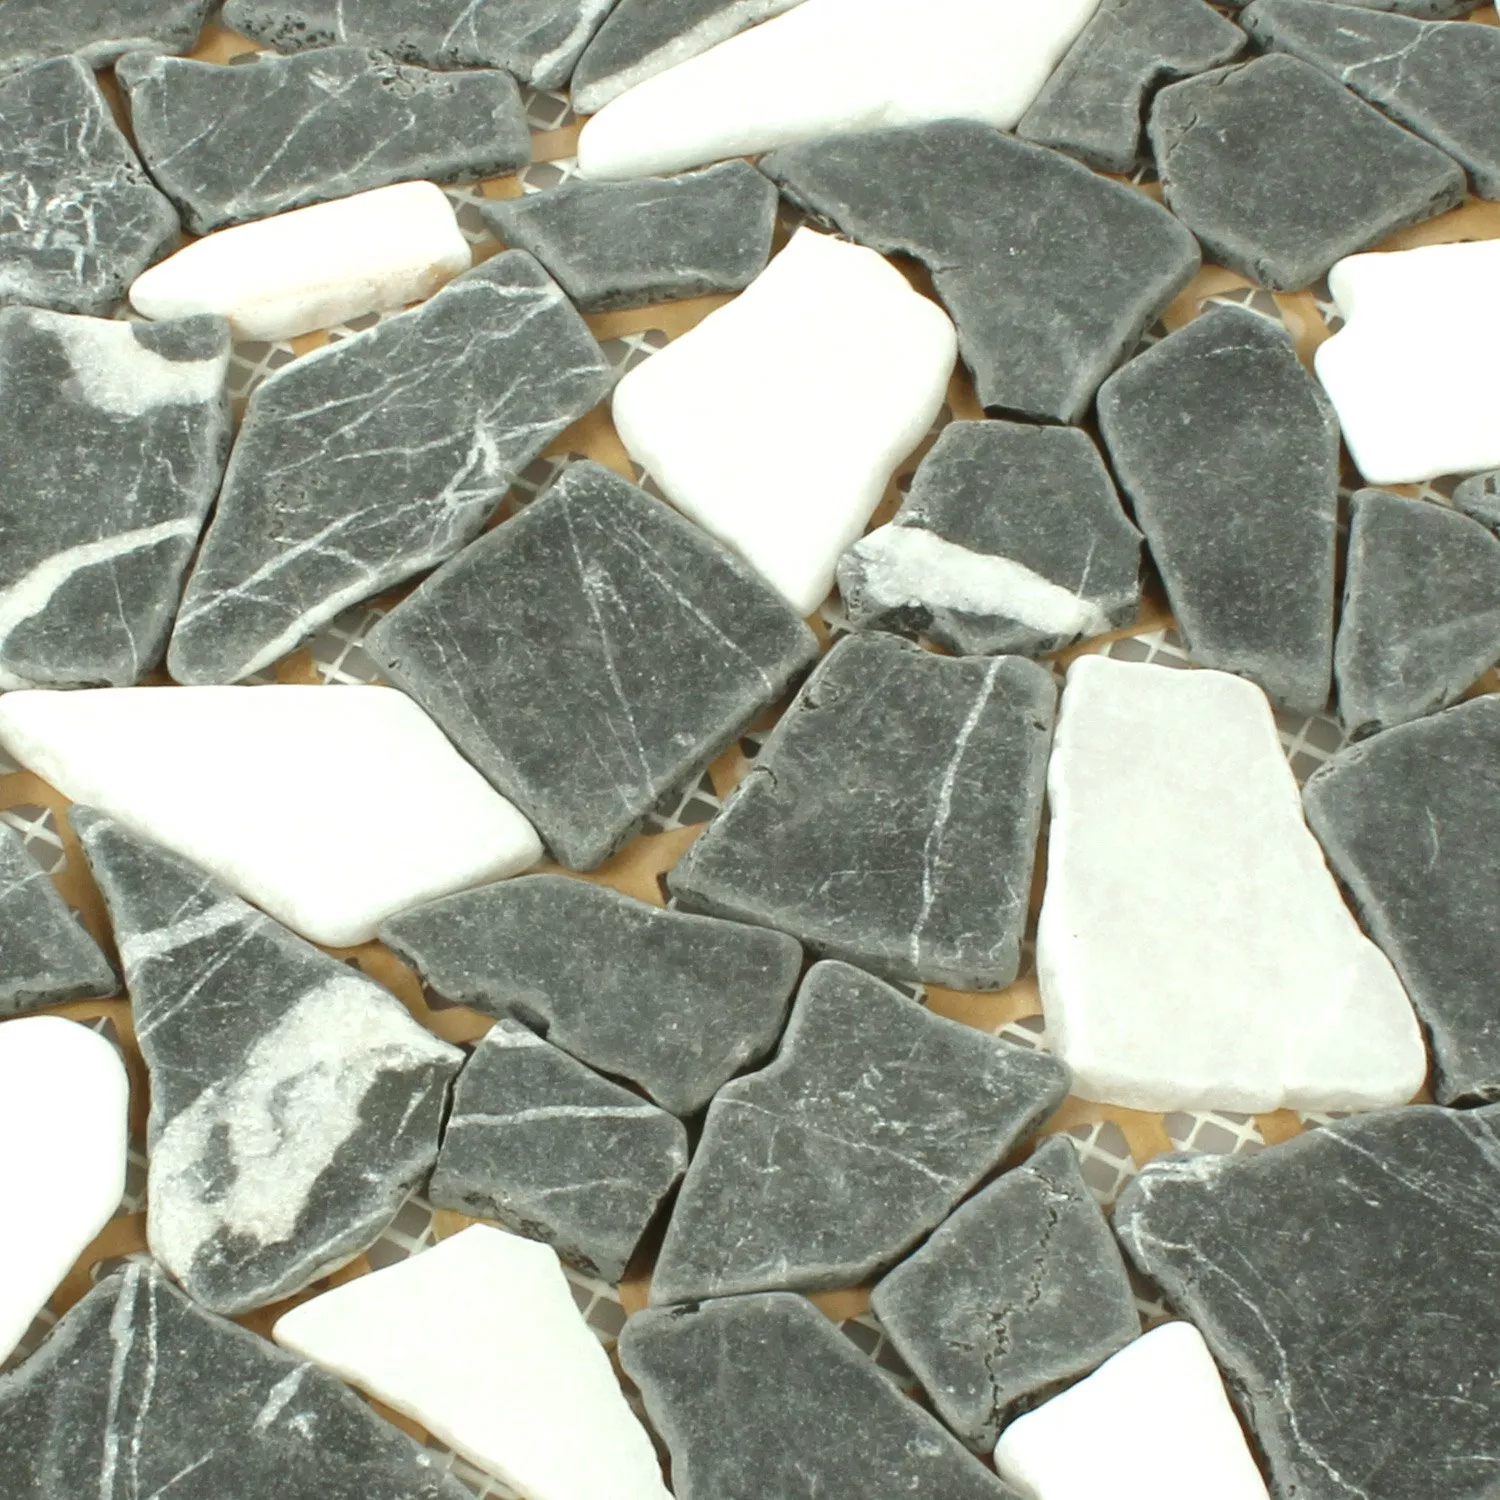 Sample Mosaic Tiles Broken Marble Verde Botticino